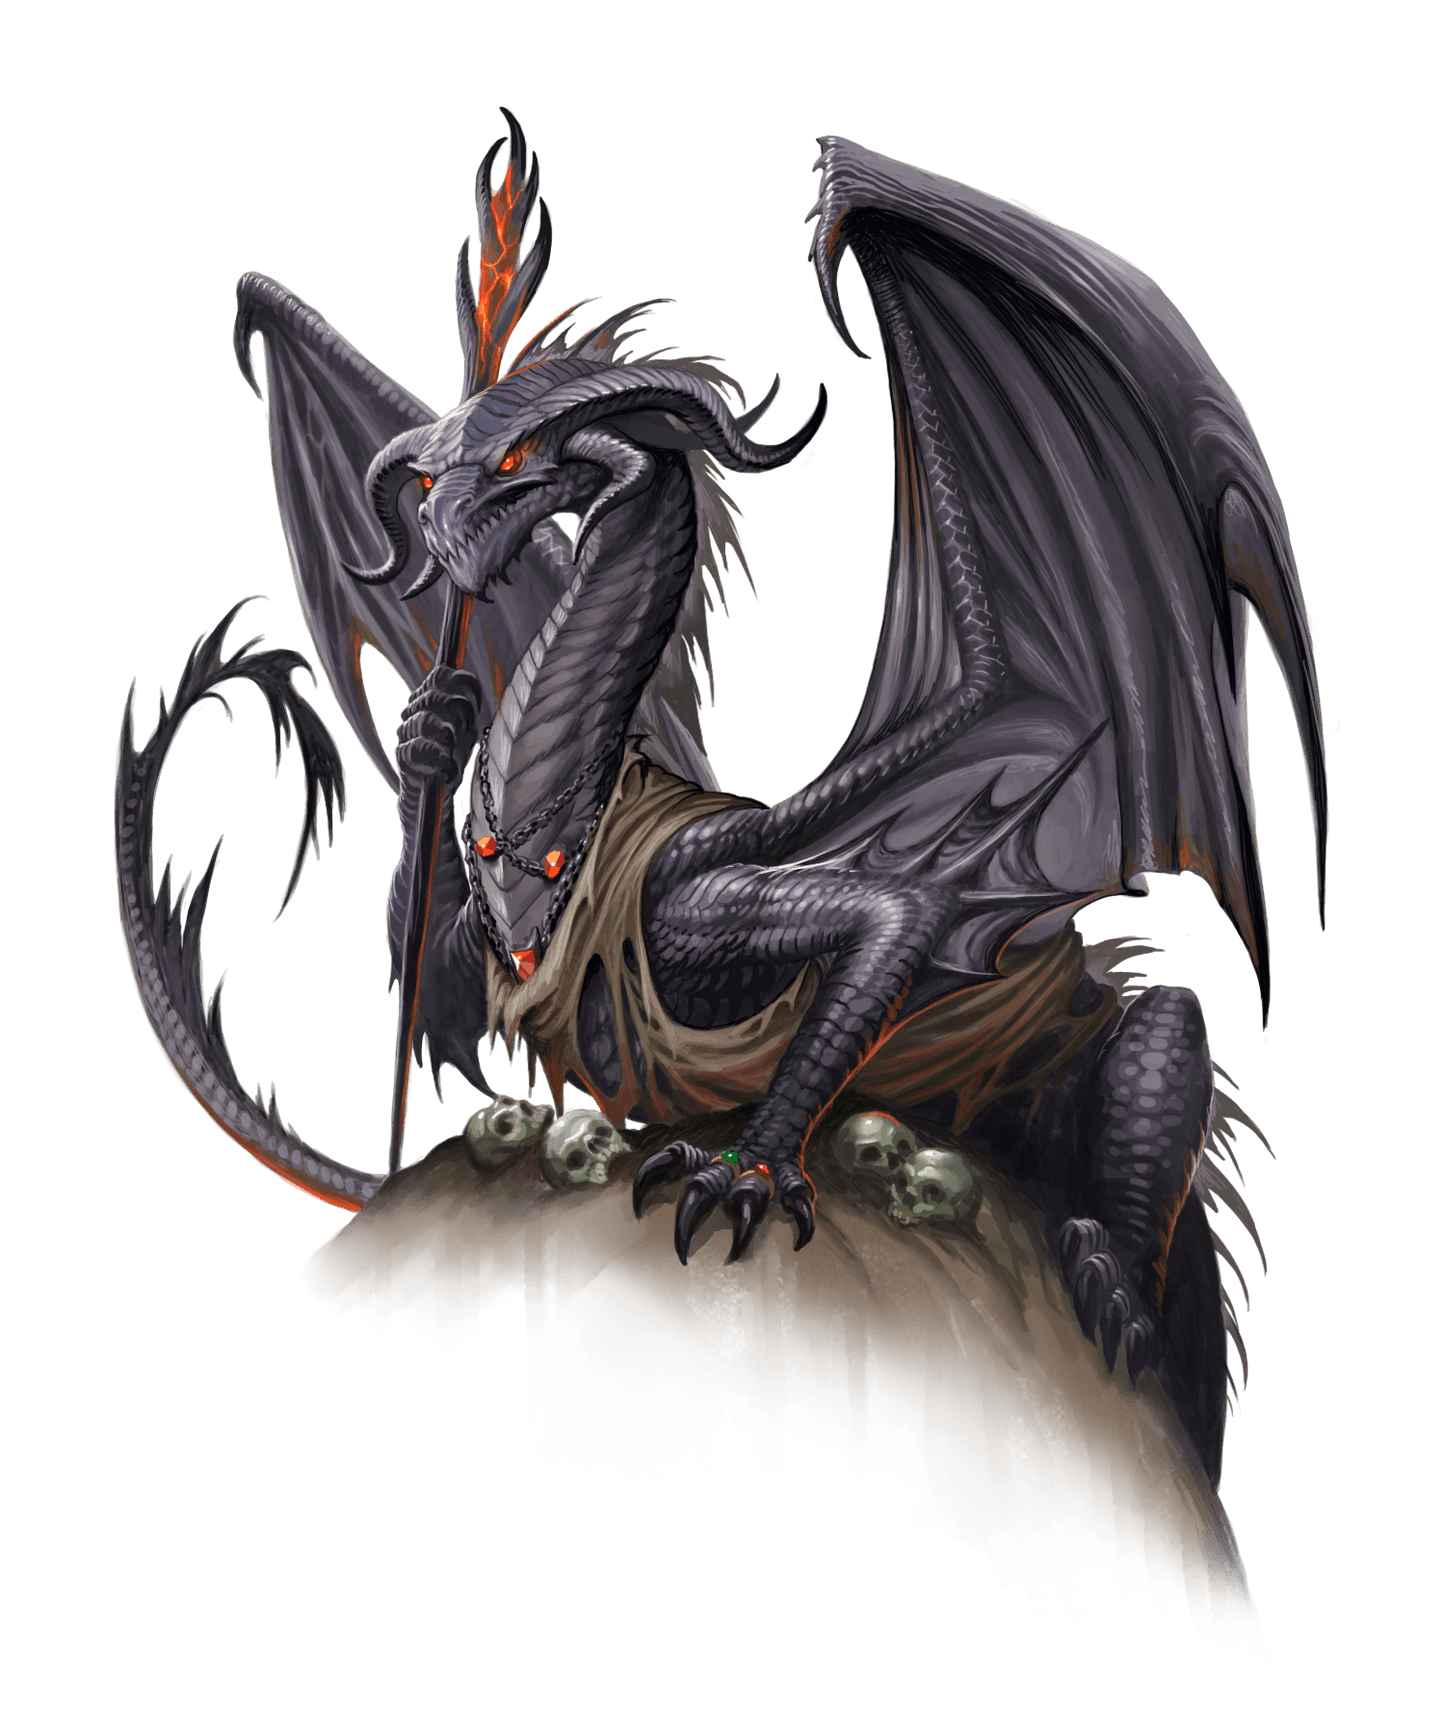 Battlezoo Ancestries: Dragons Hardcover & PDF